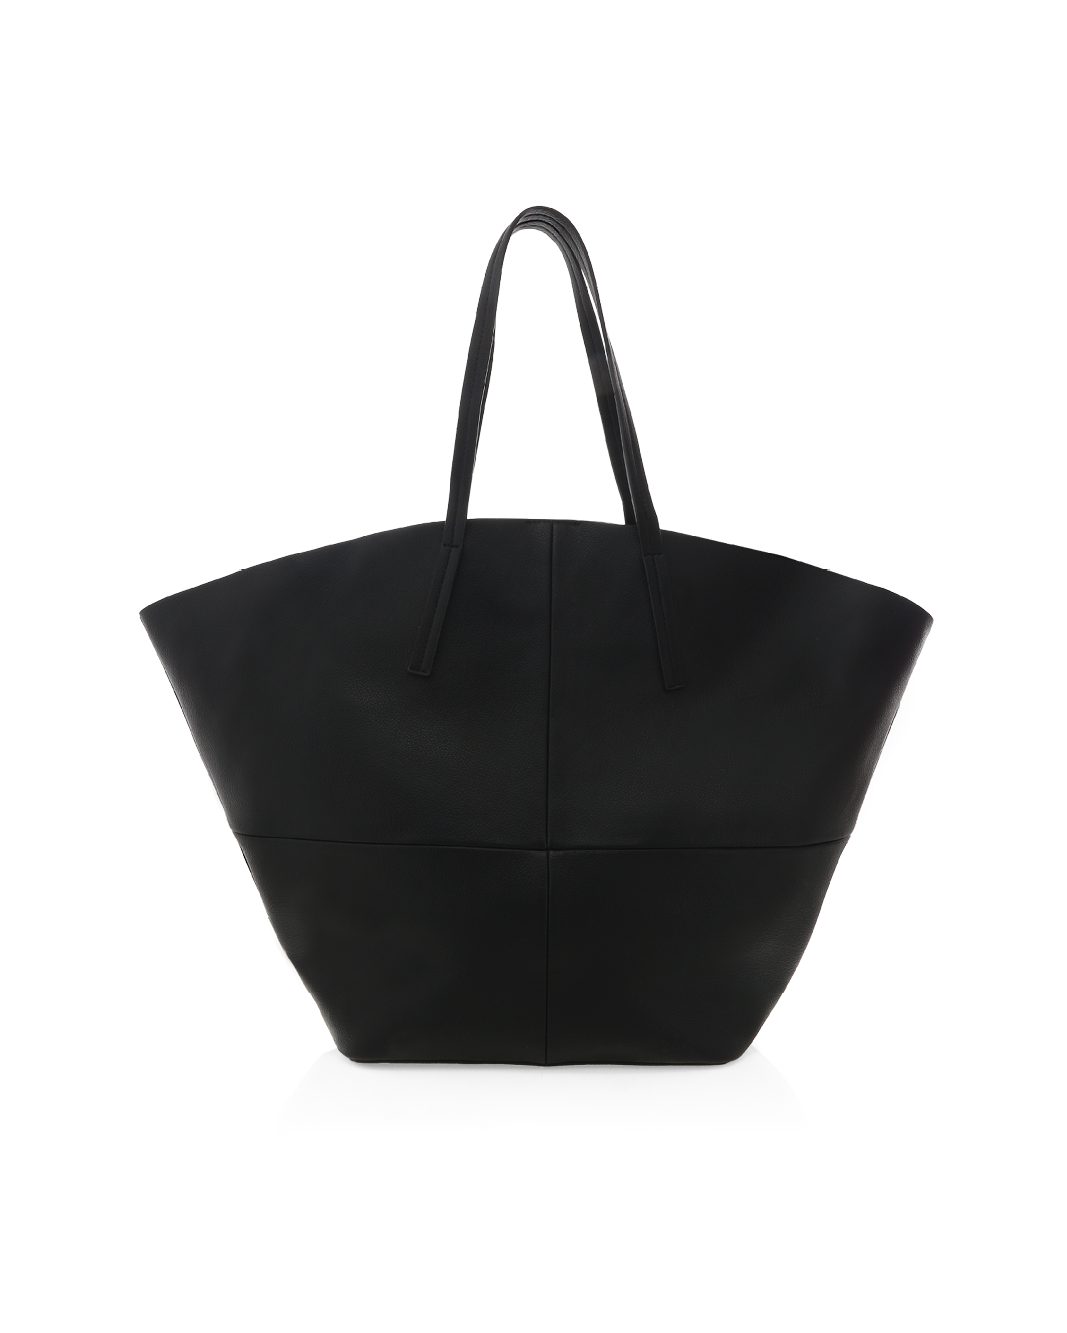 TASHA TOTE BAG - BLACK-Handbags-Billini-O/S-Billini